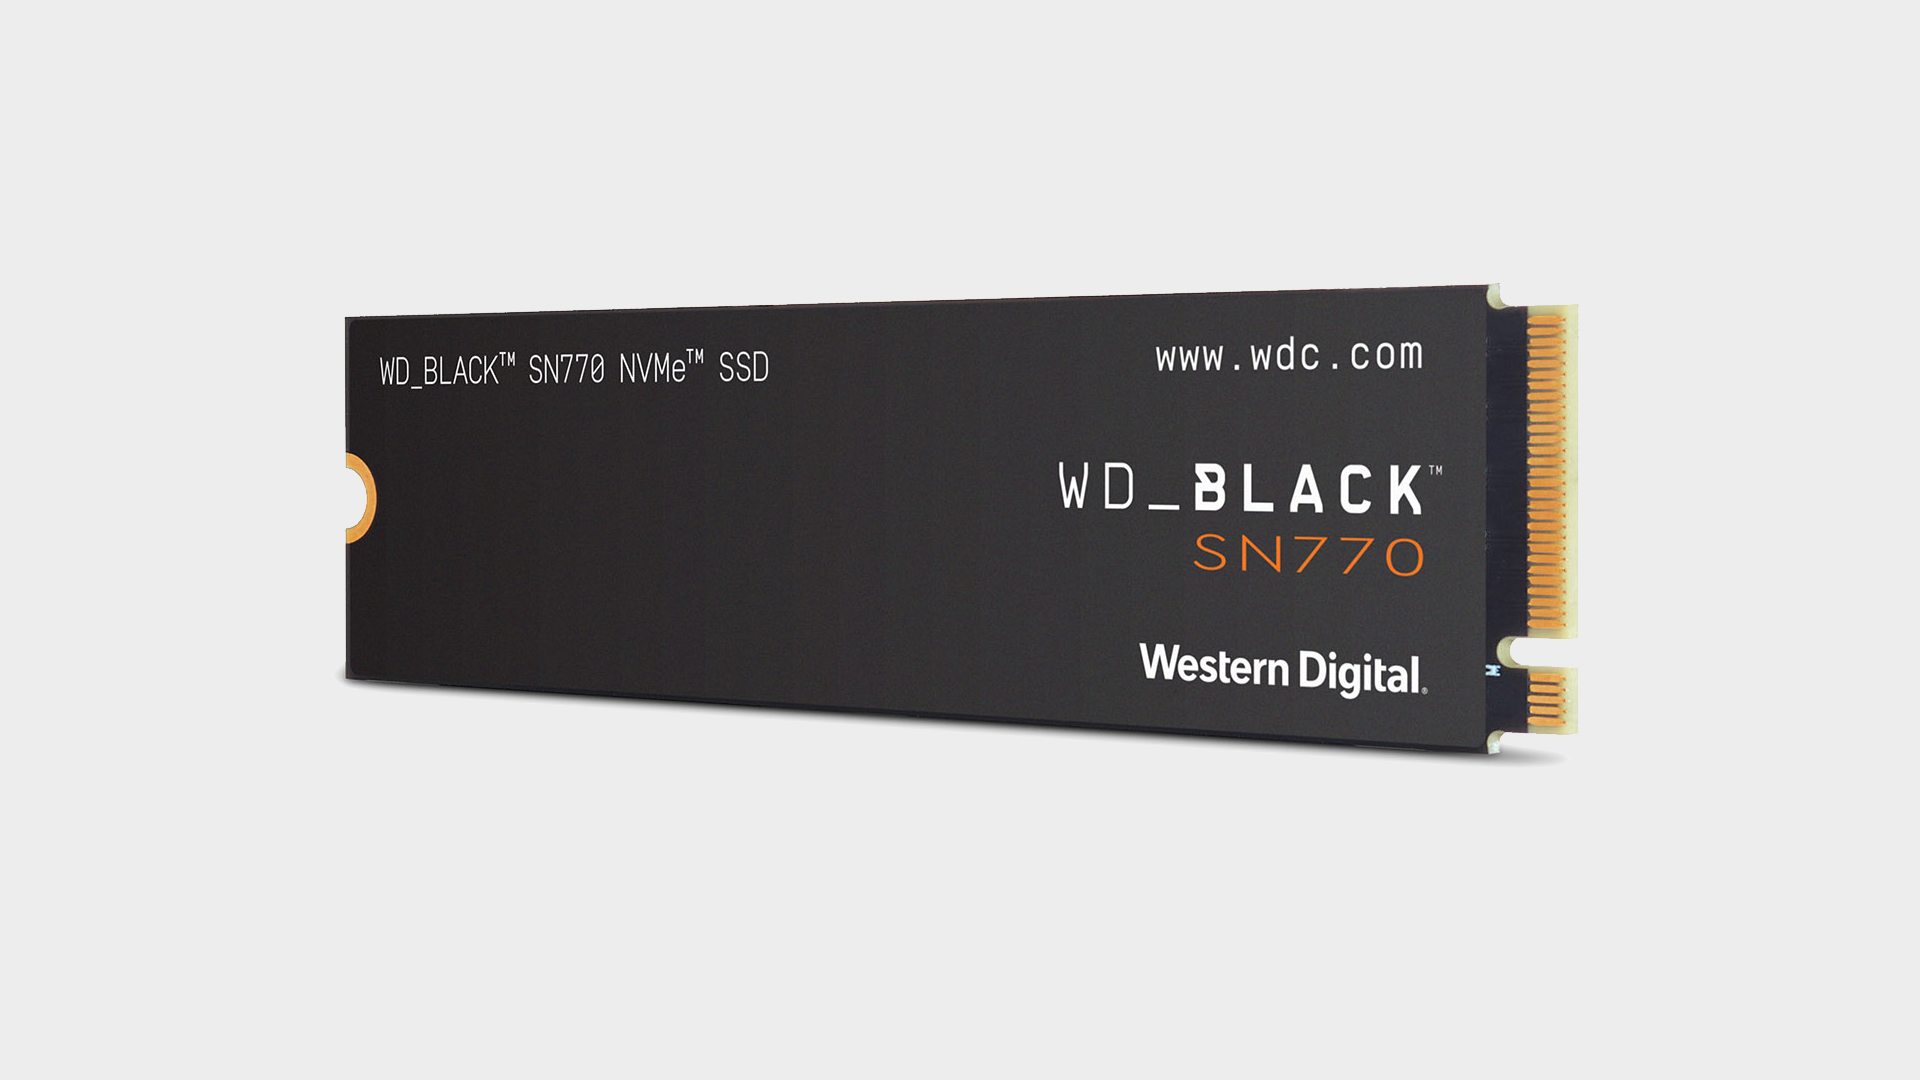 WD Black SN770